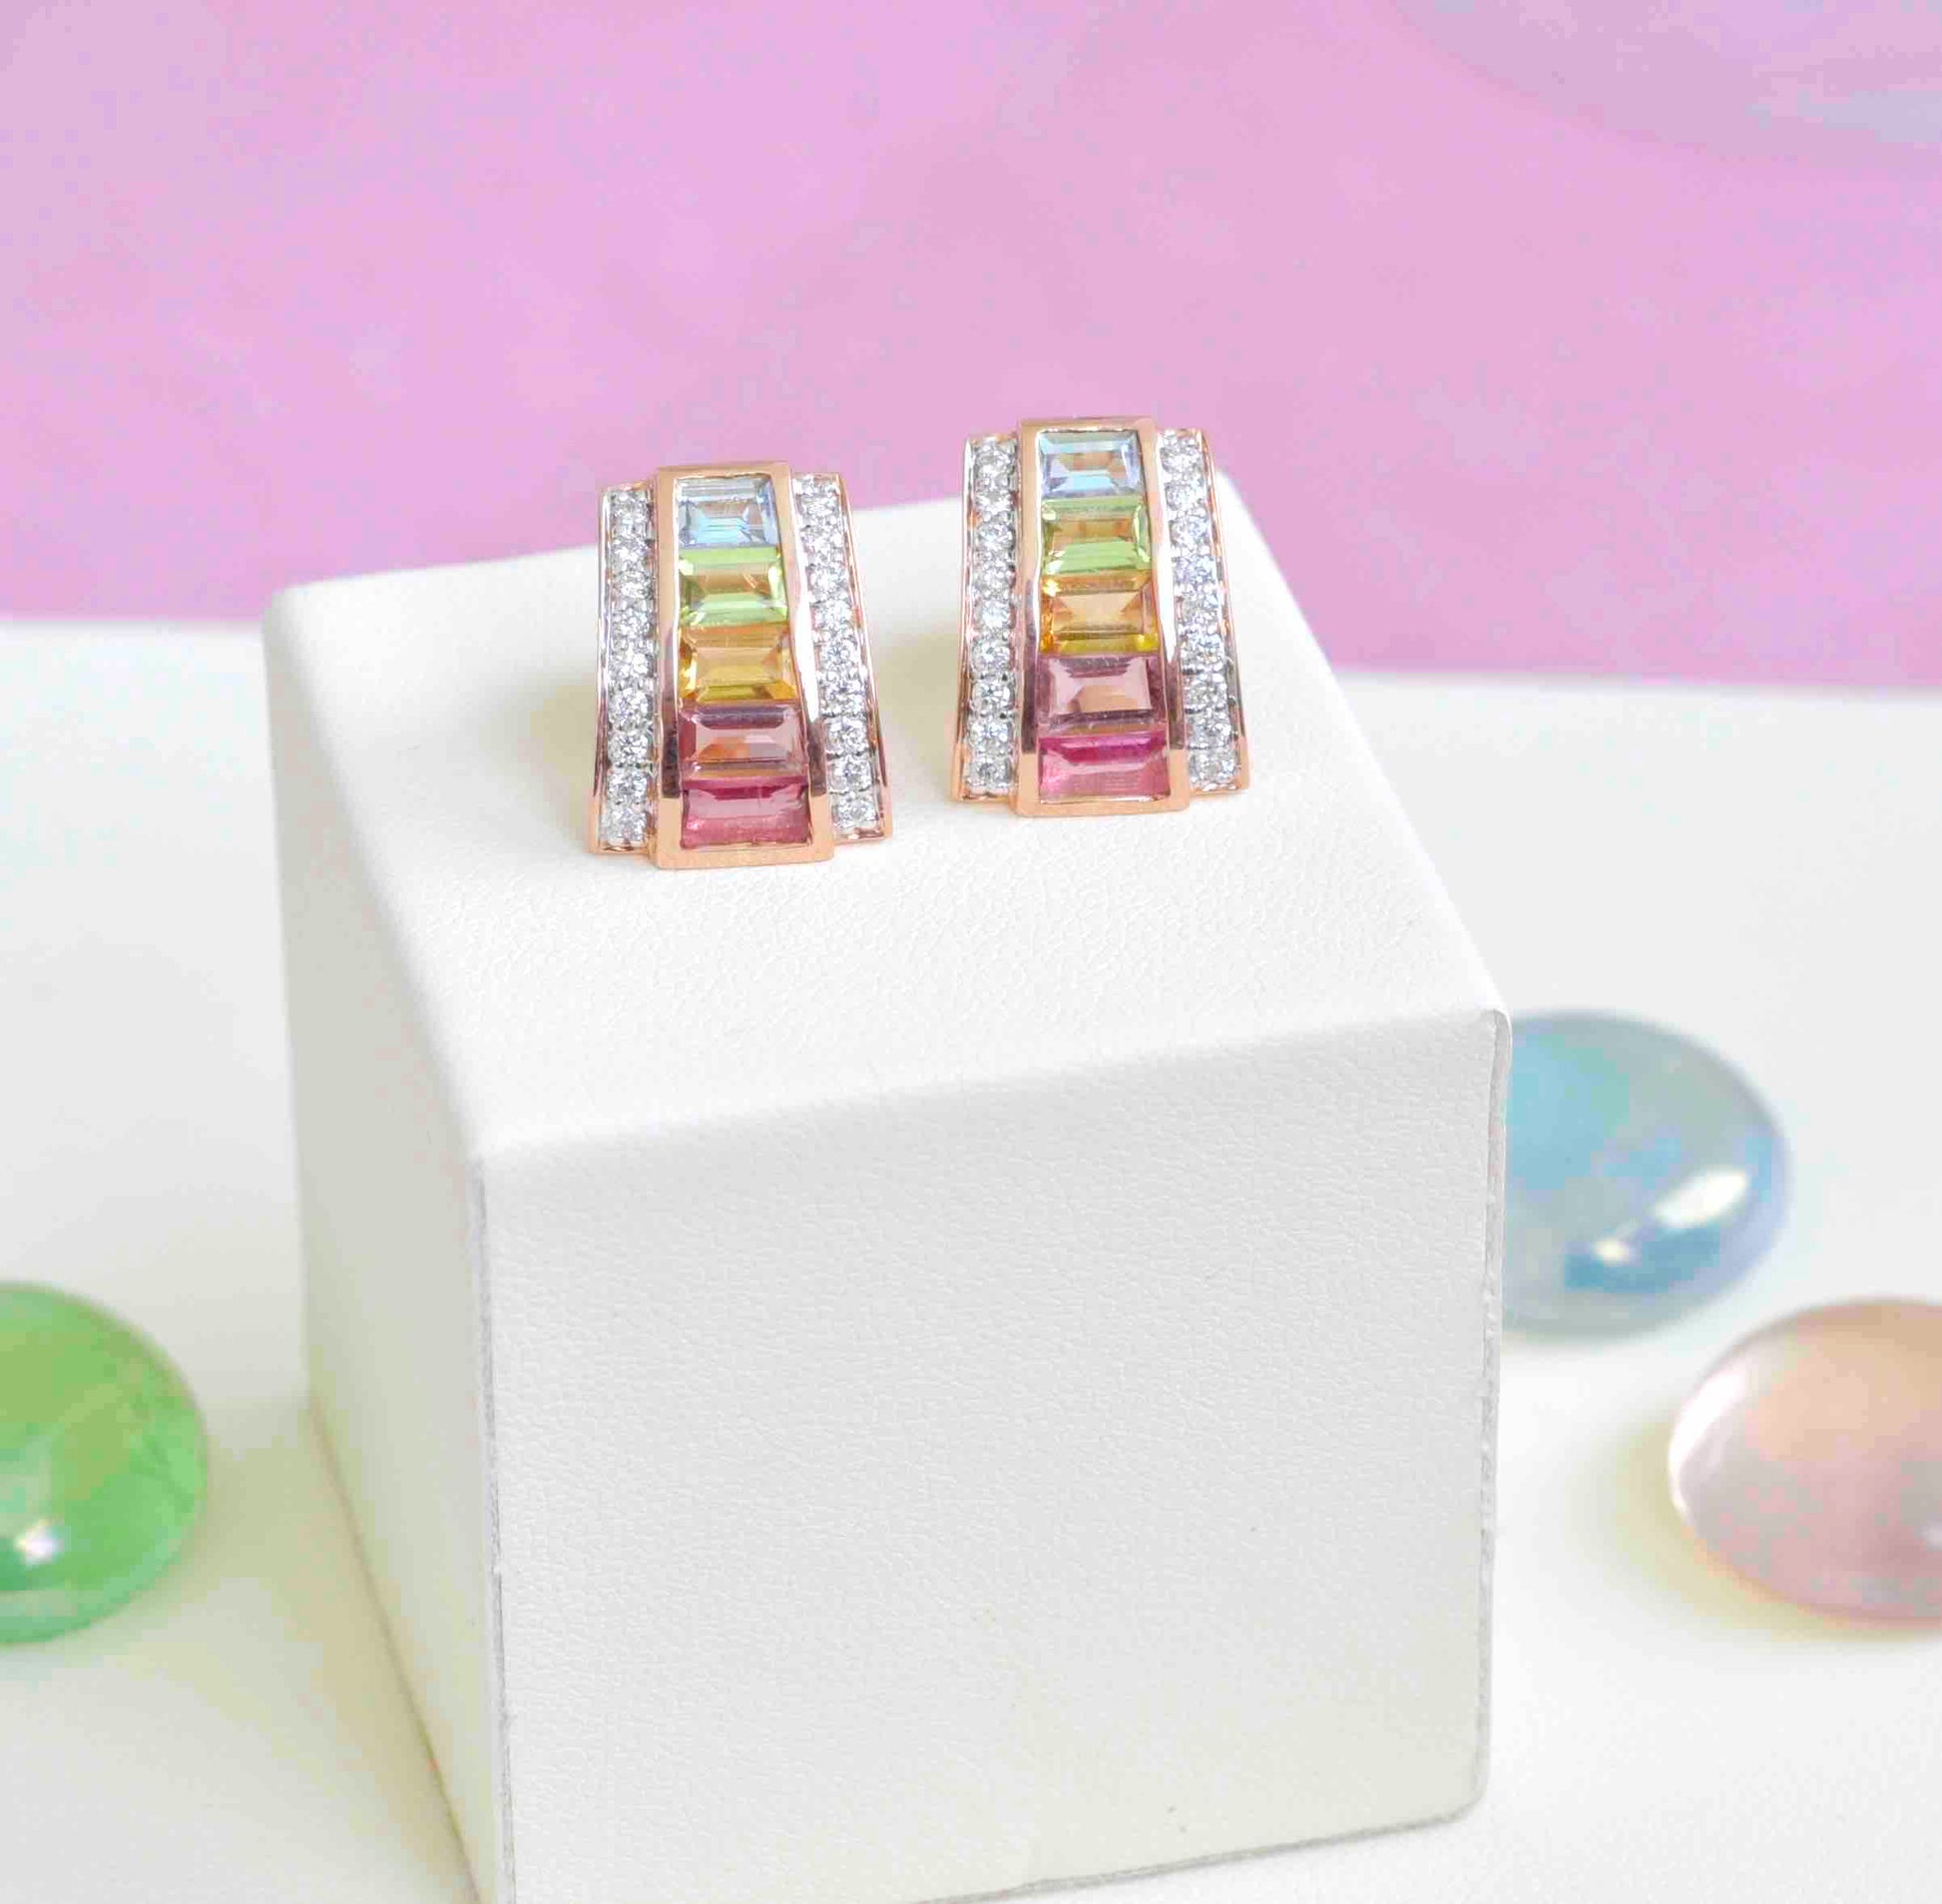 18K Gold Pyramid Channel-Set Rainbow Gemstones Stud Earrings - Vaibhav Dhadda Jewelry